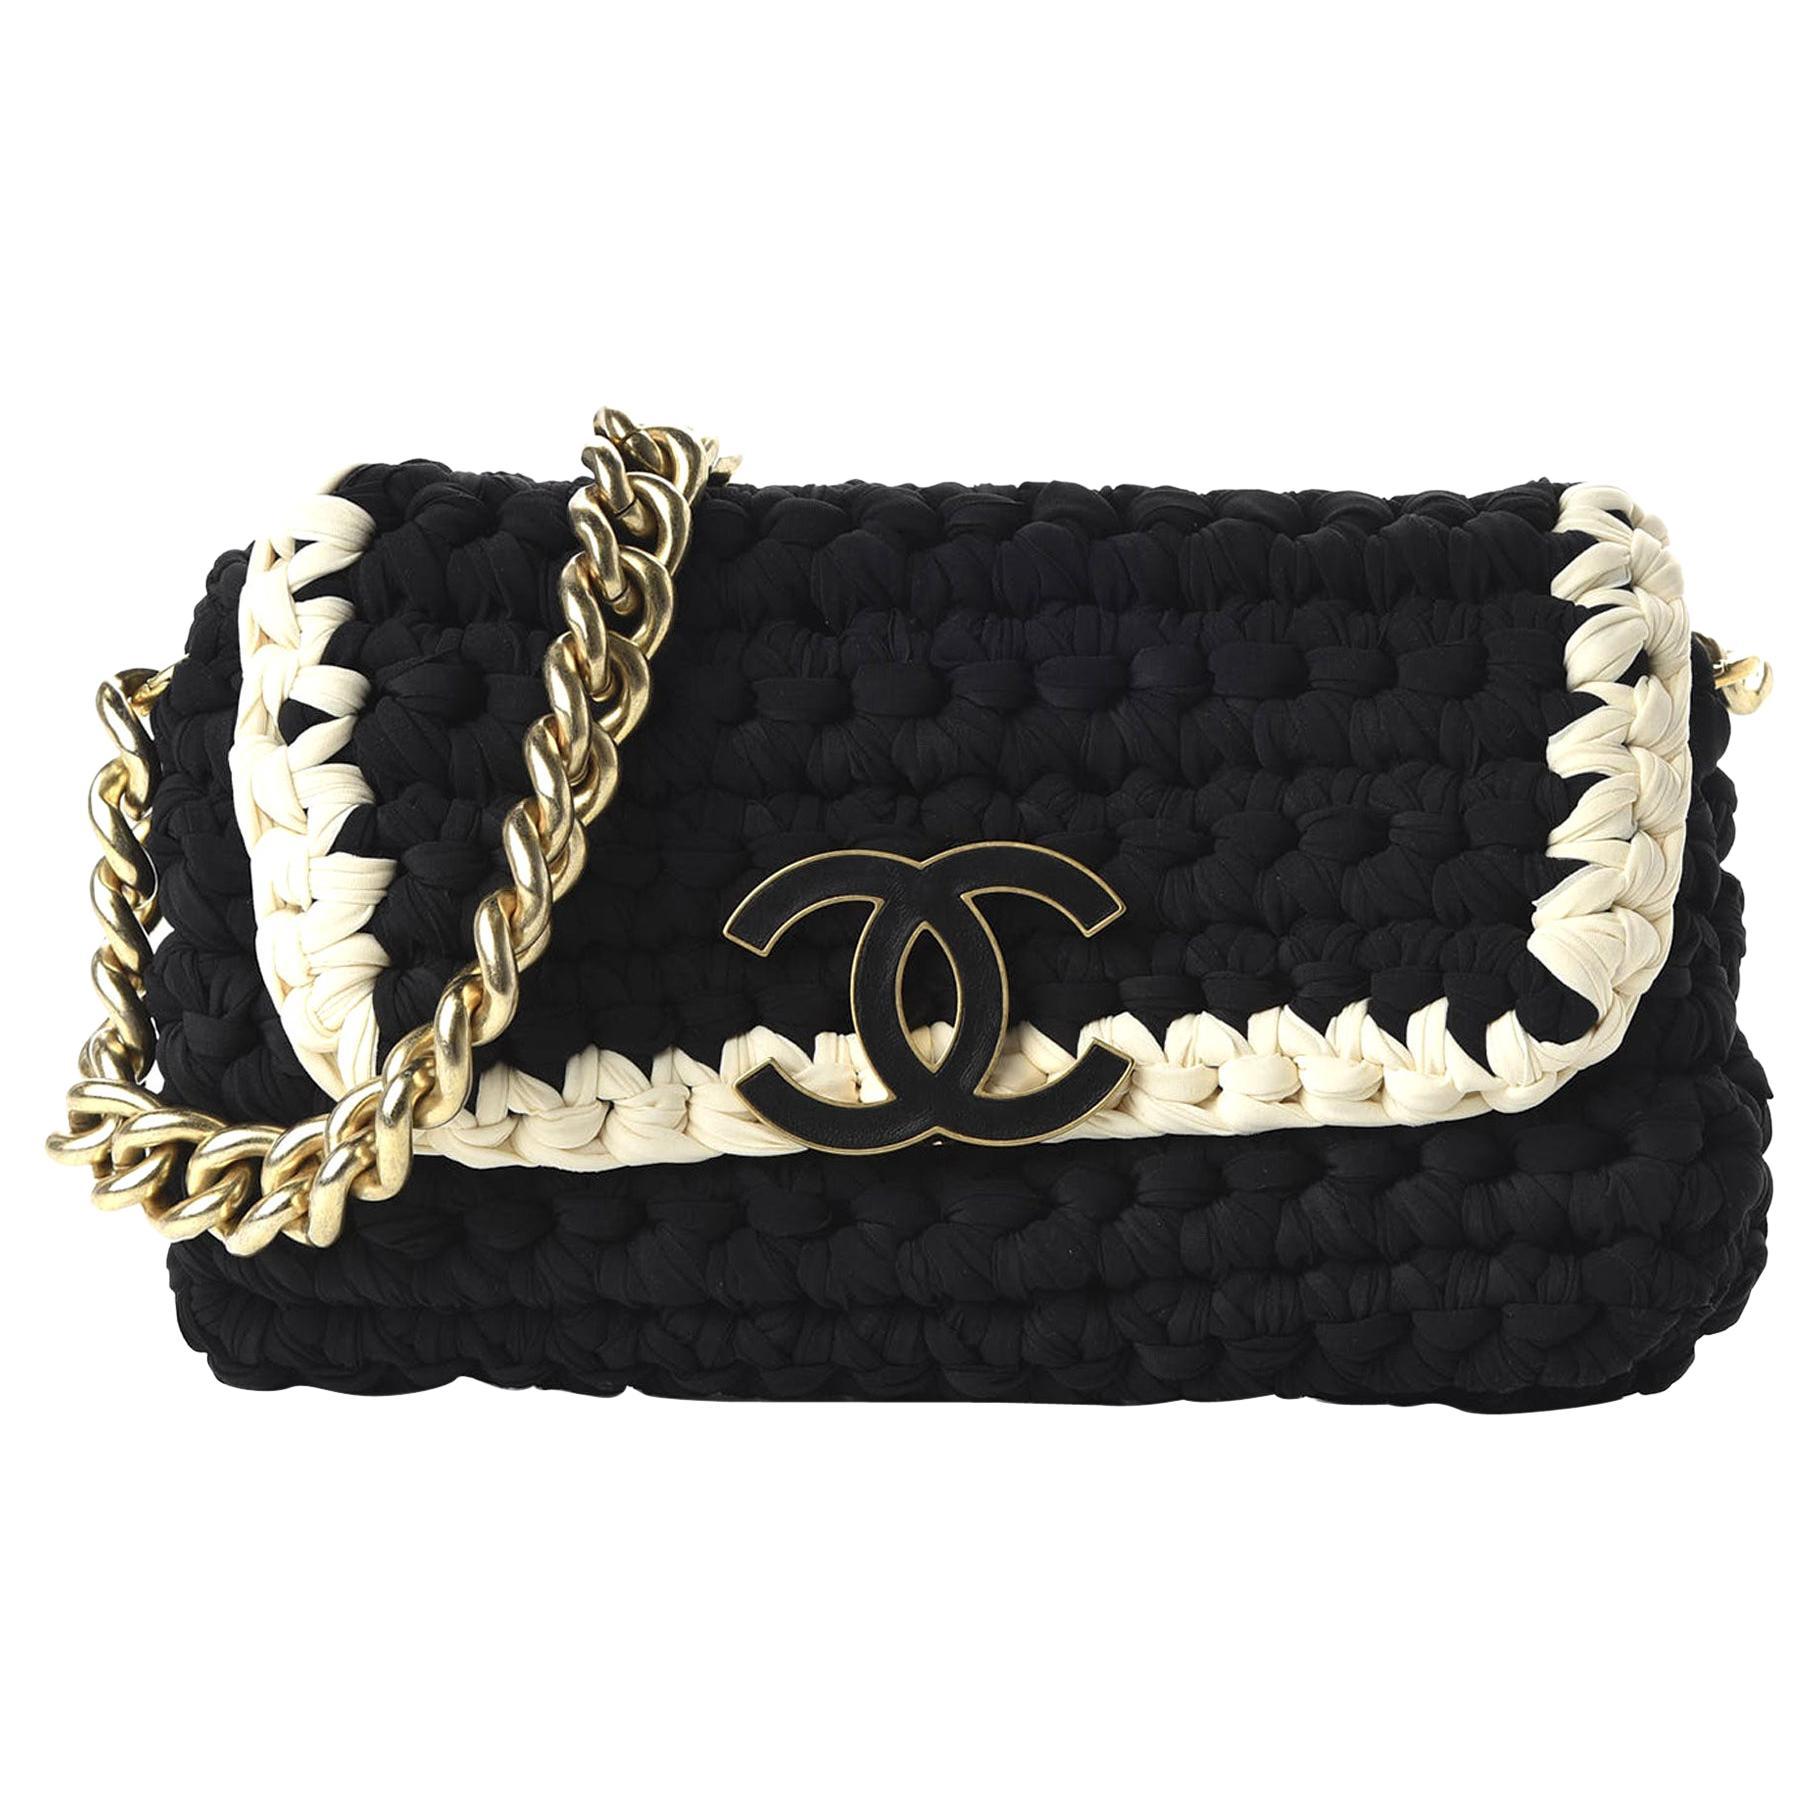 Chanel Interwoven Woven Crochet Bicolor Two Tone Medium Black & White Flap Bag For Sale